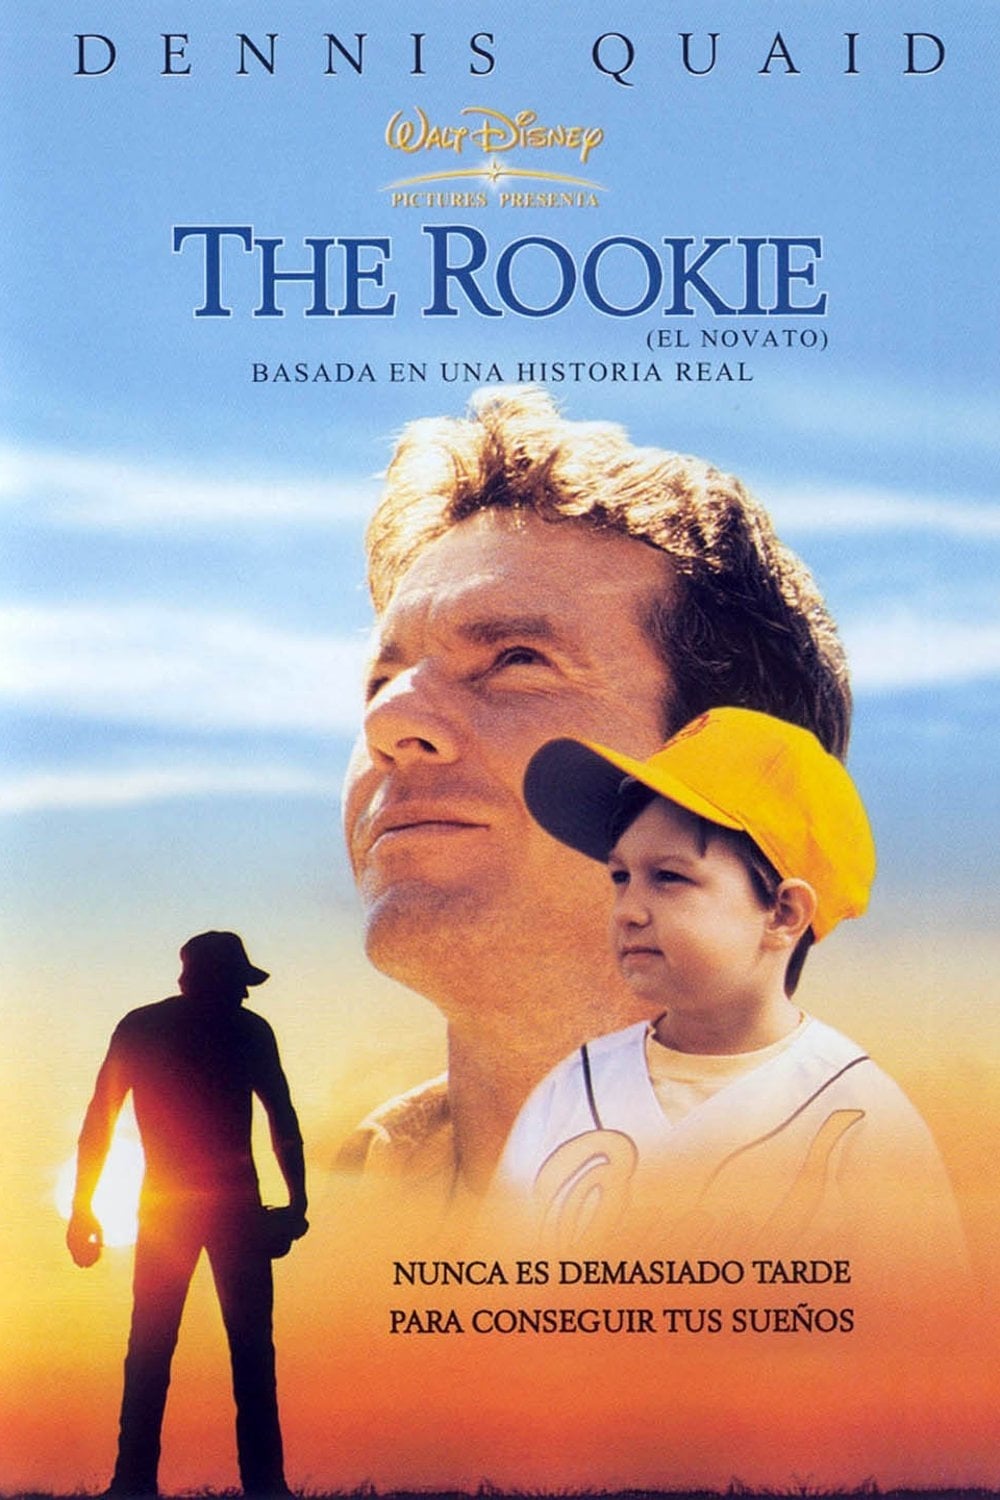 The Rookie (El novato) poster